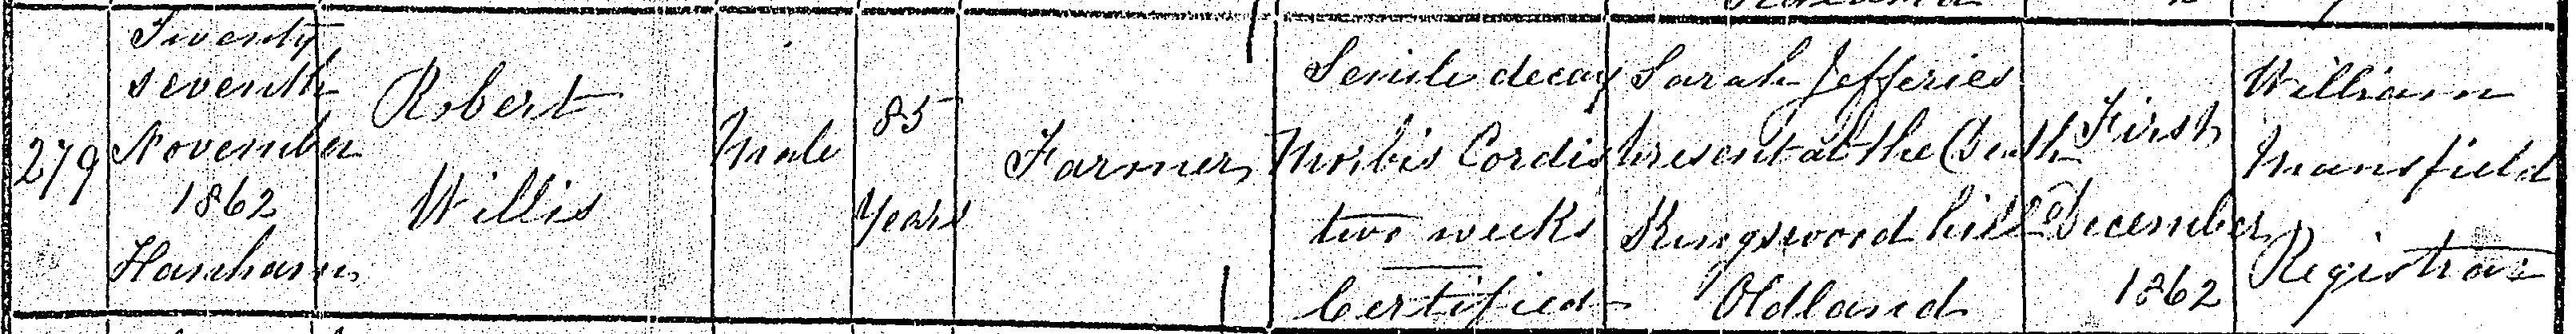 Figure 5: The Official Death Registration of Robert Willis’s death